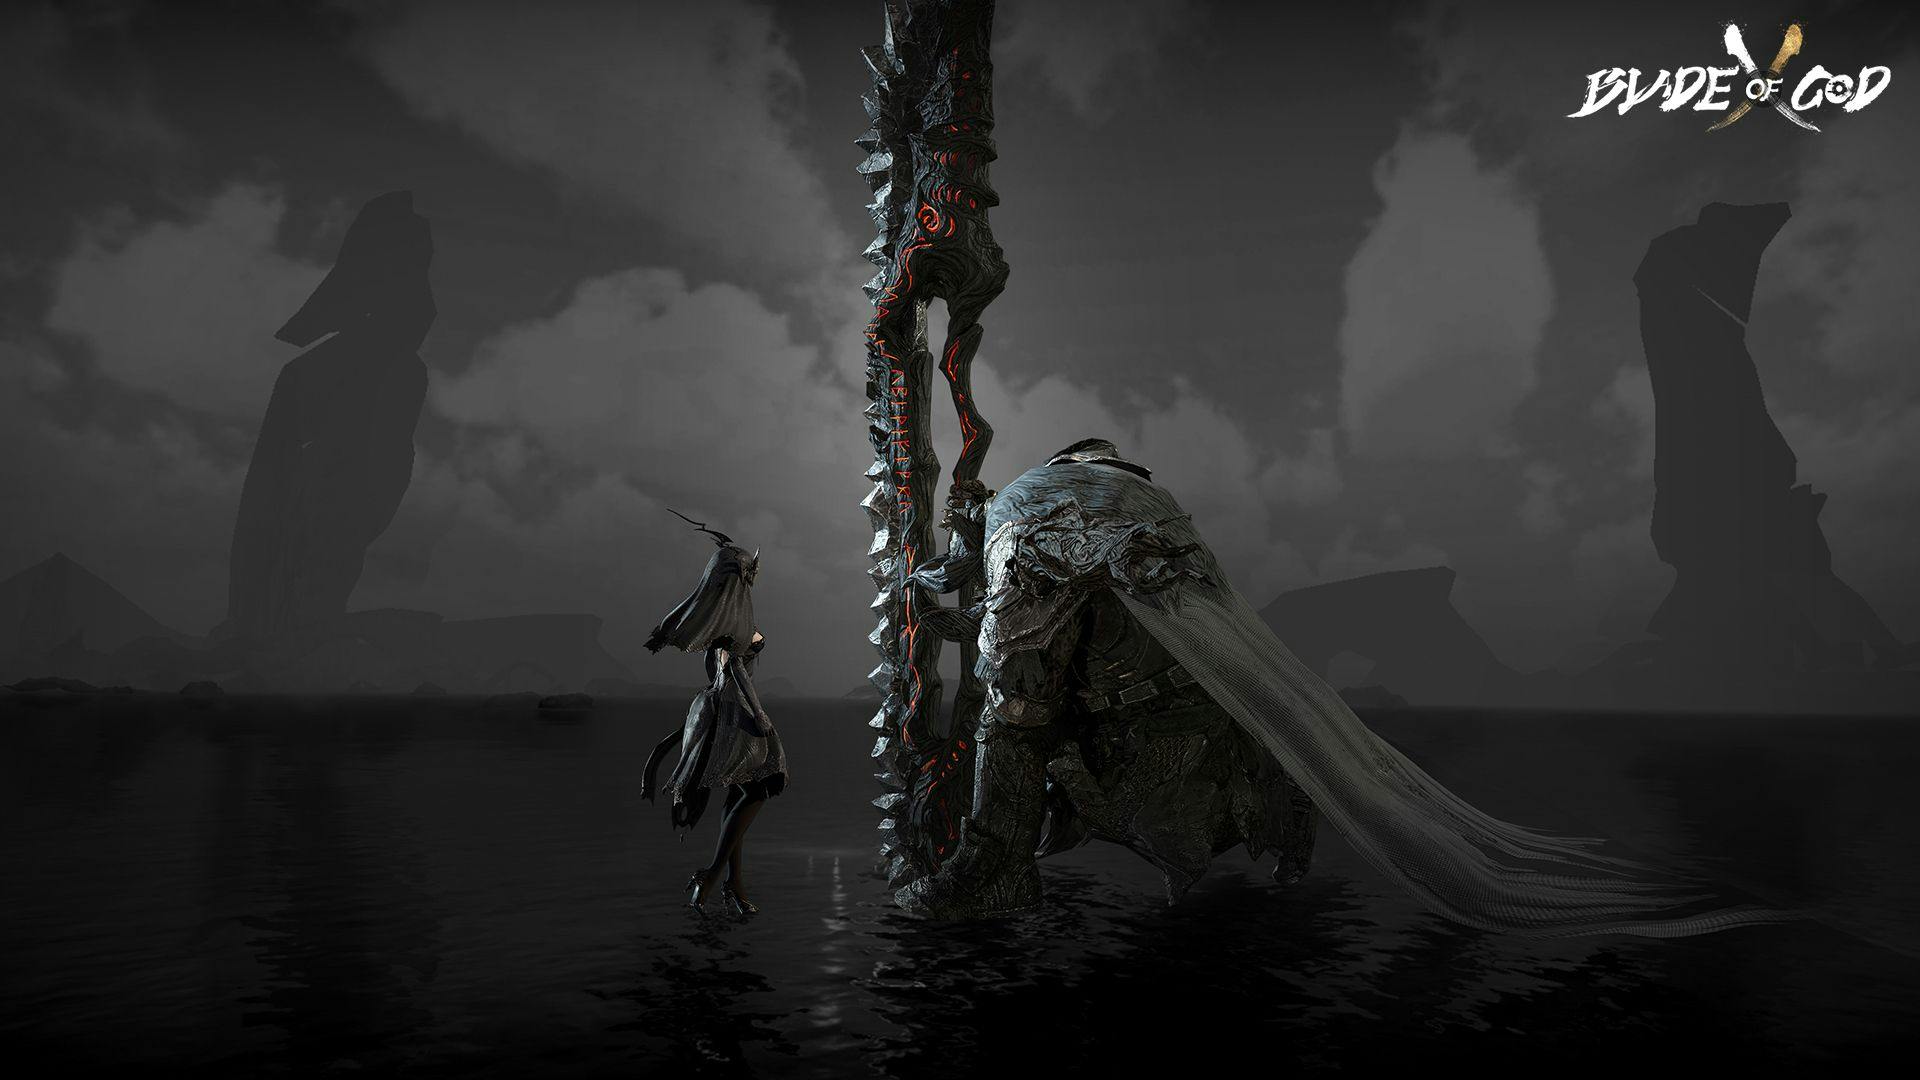 Blade of God X game image 3.jpg